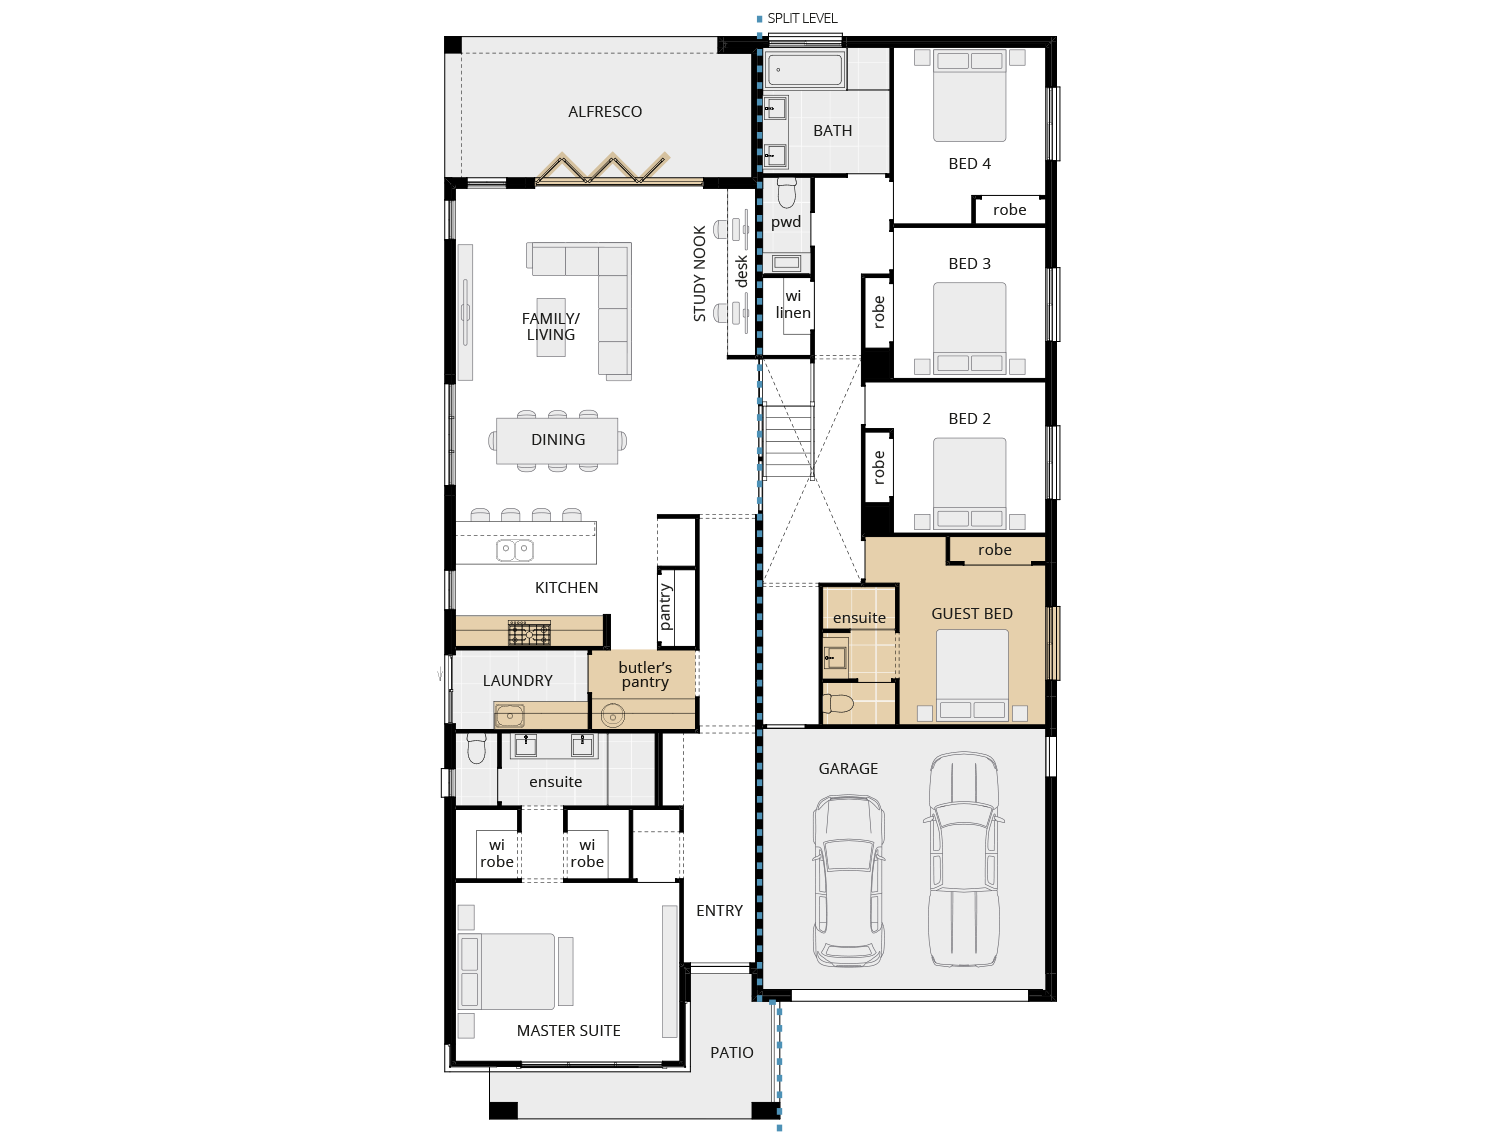 home design darlington split level upgrade floorplan rhs